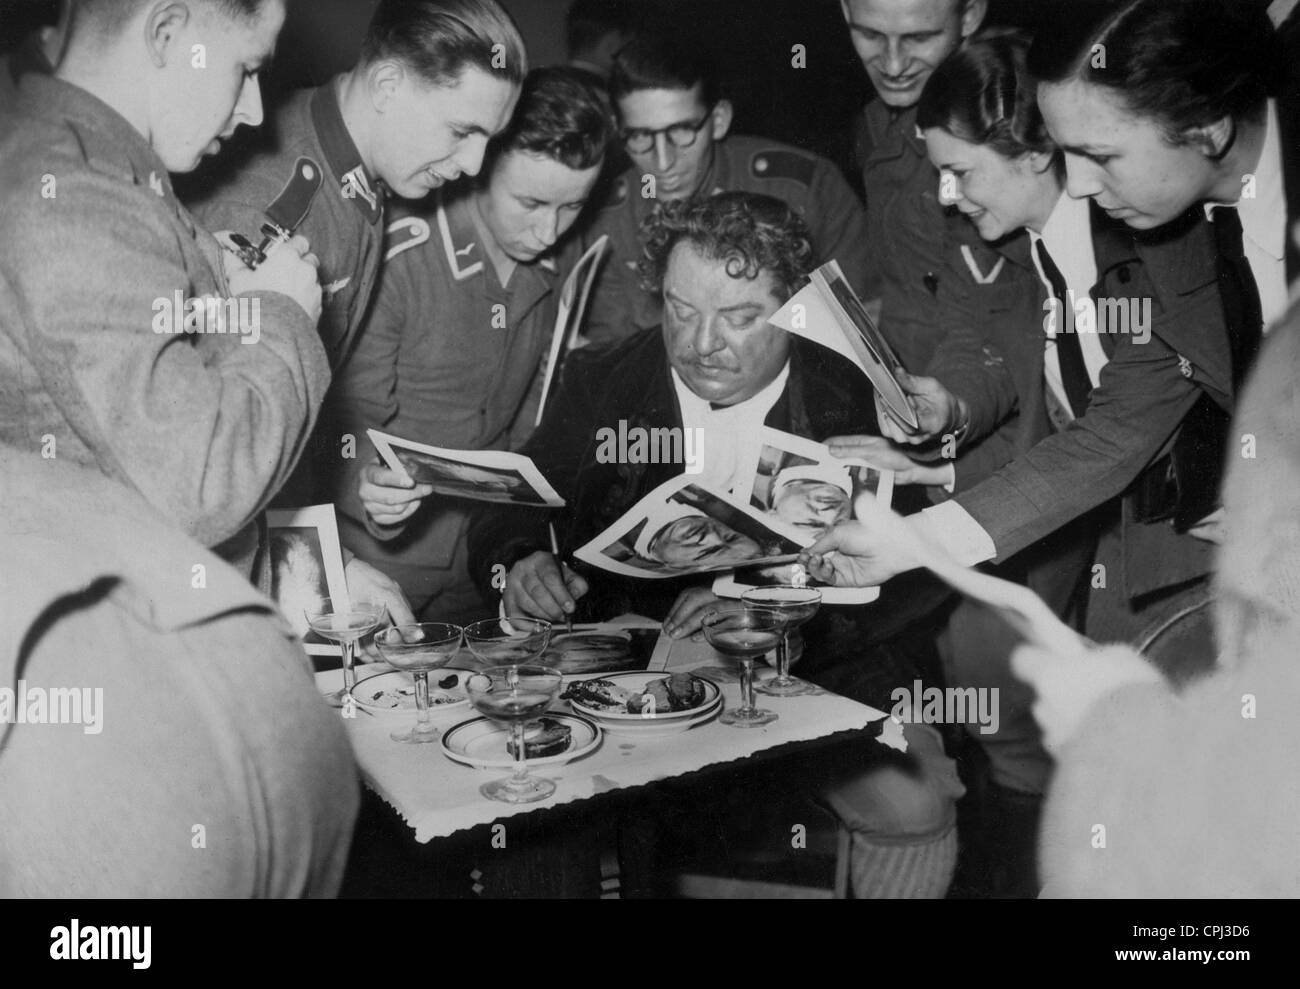 Heinrich George signs autographs, 1941 Stock Photo